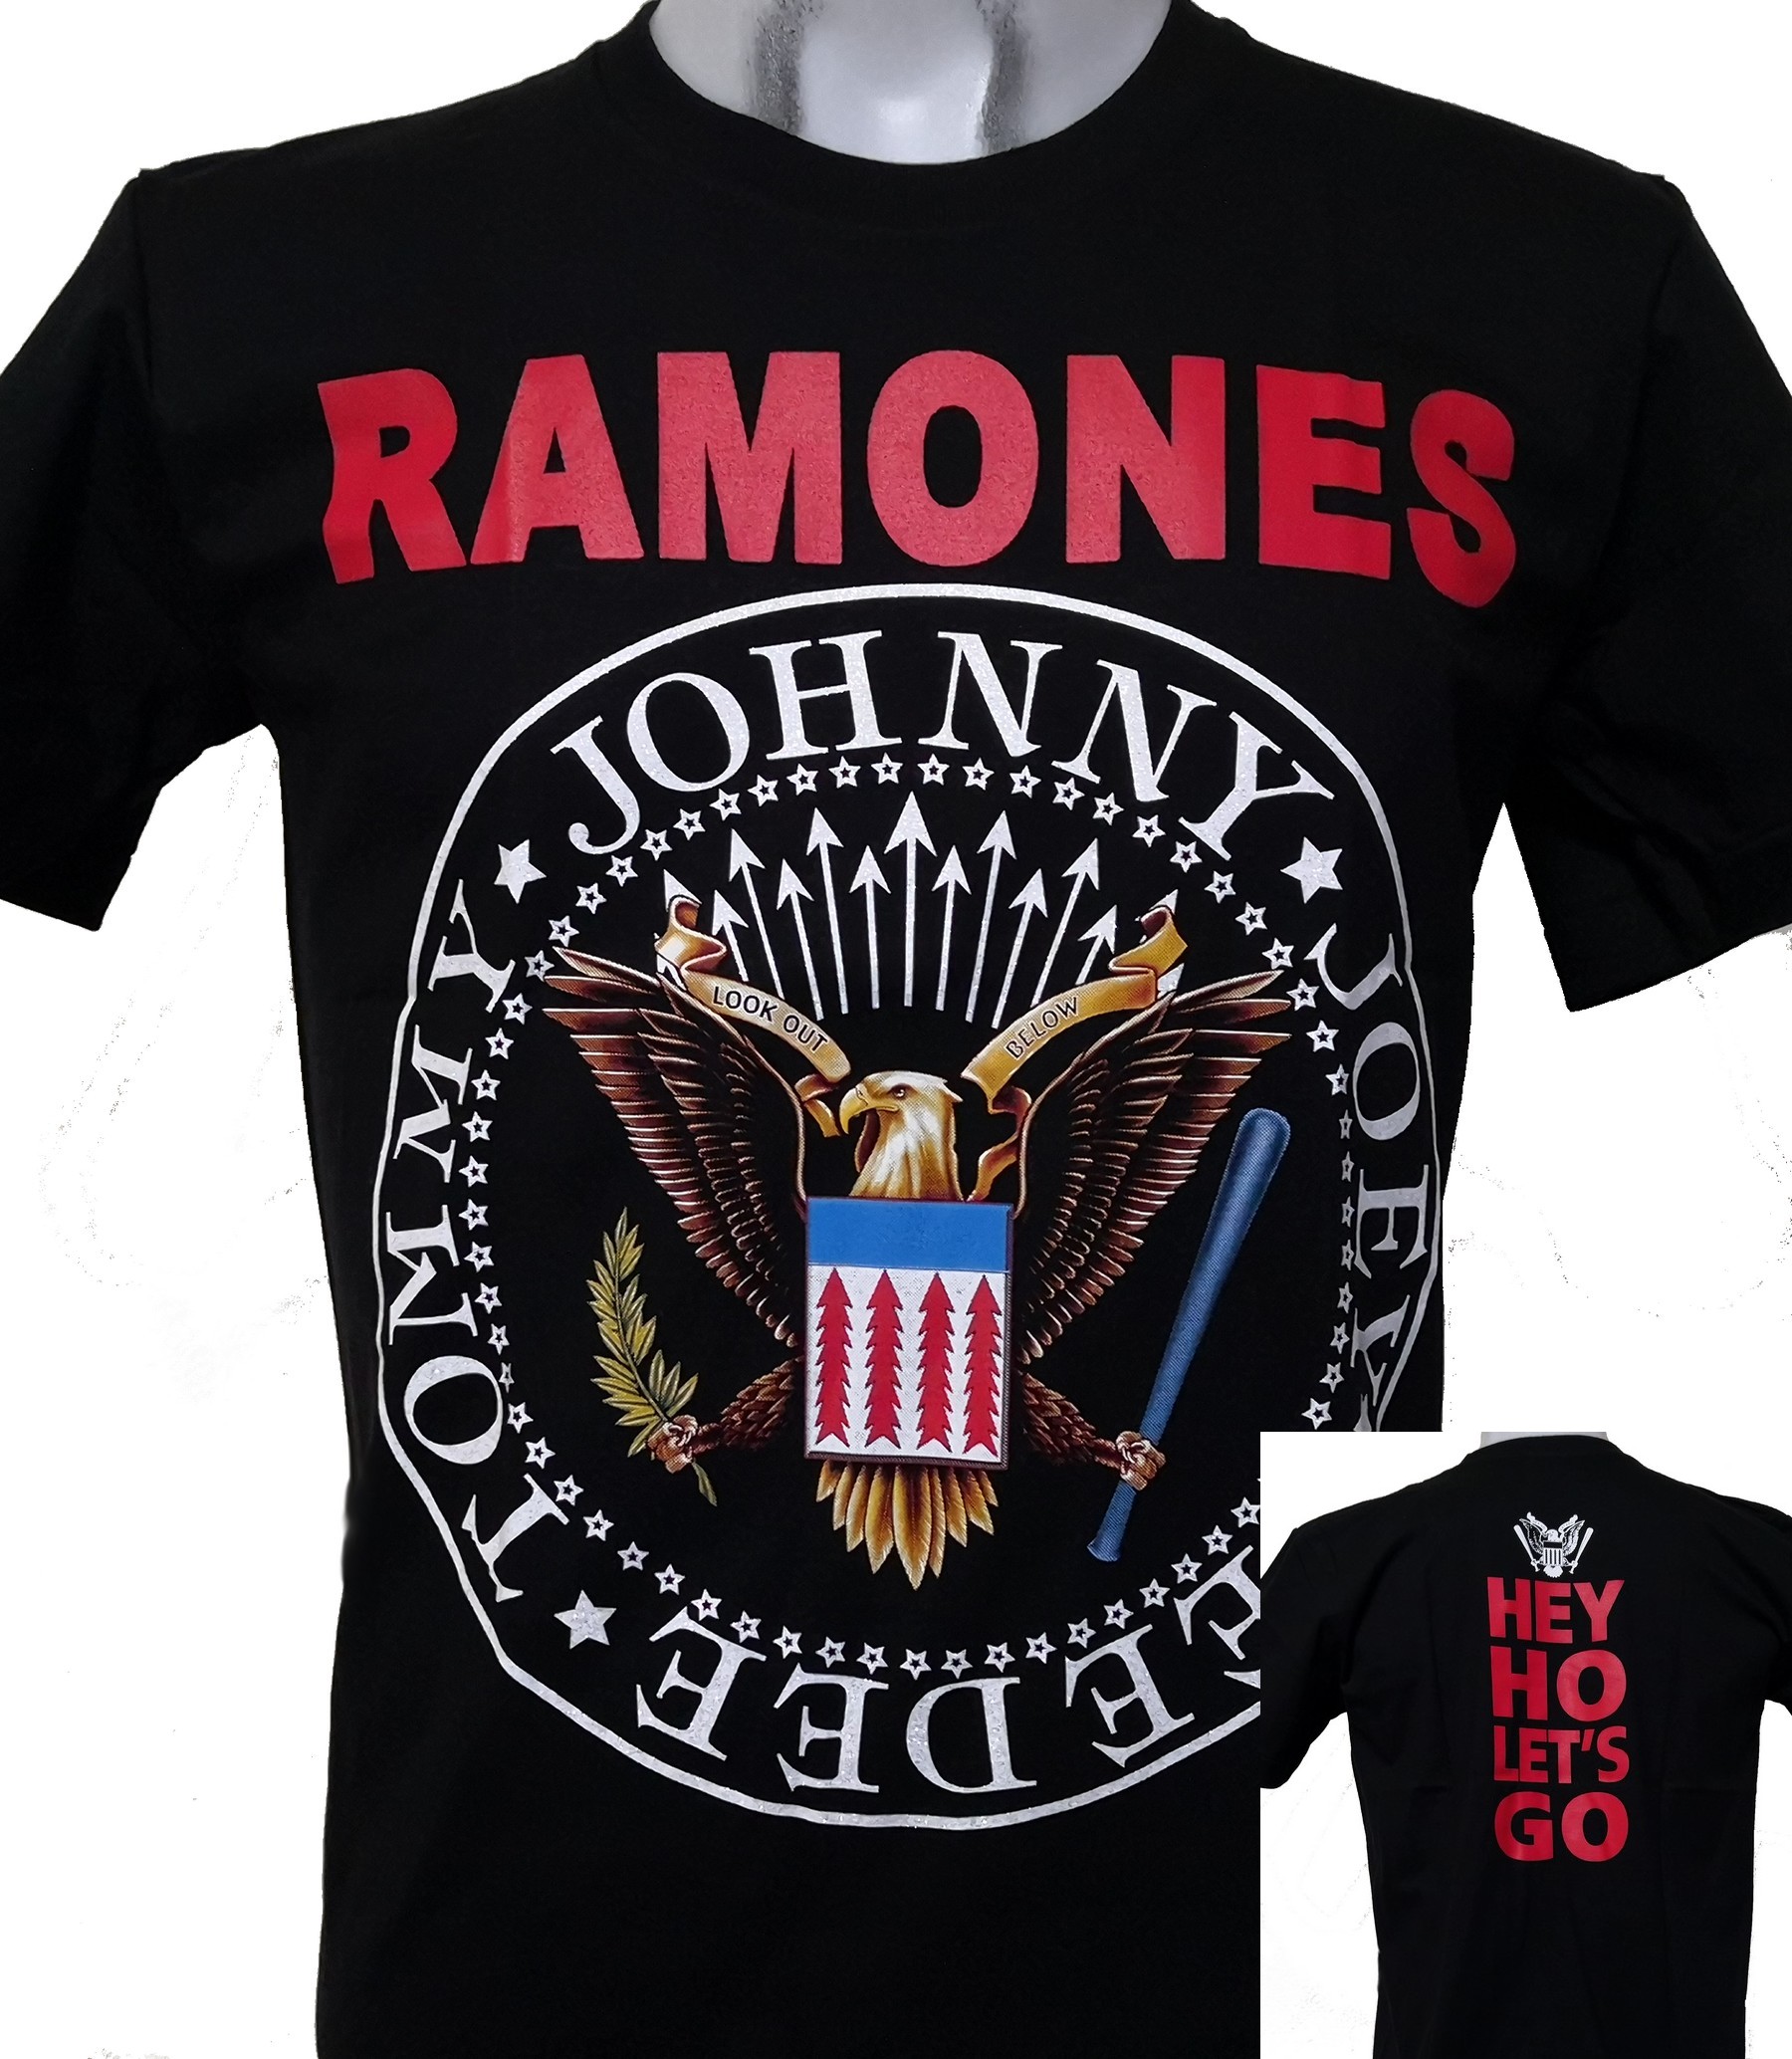 Ramones t-shirt size L